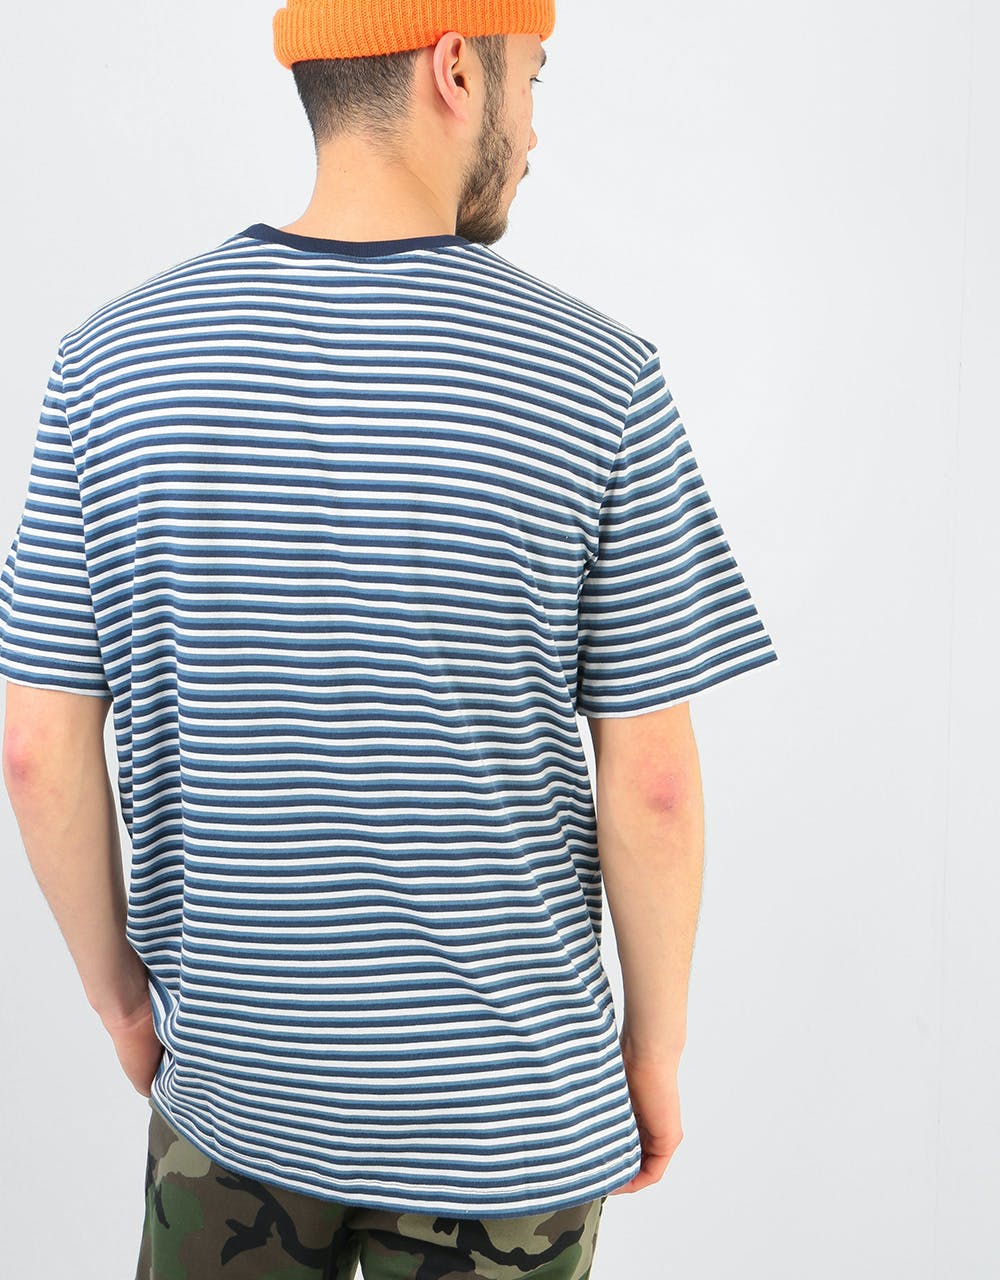 Nike SB Stripe T-Shirt -  White/Obsidian/White